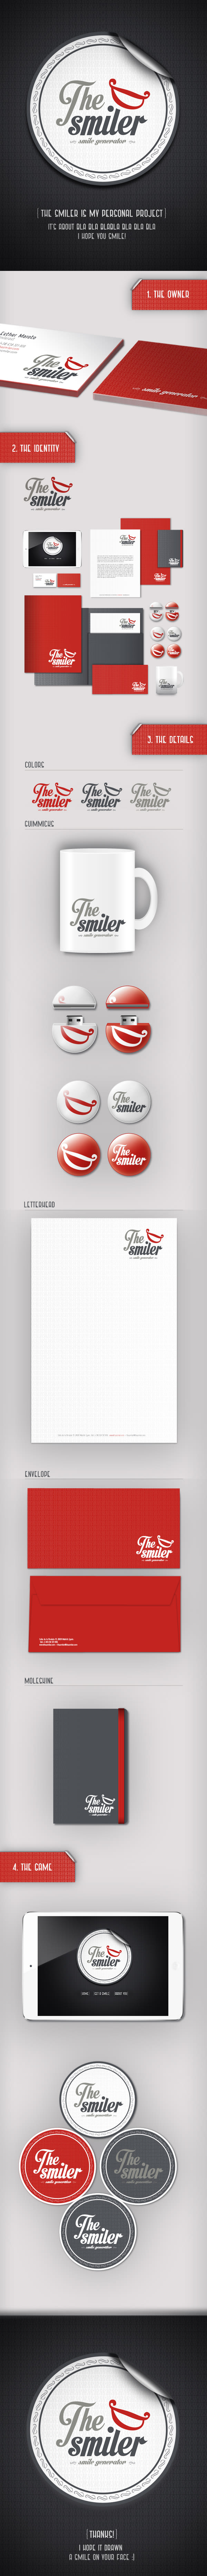 The Smiler -1